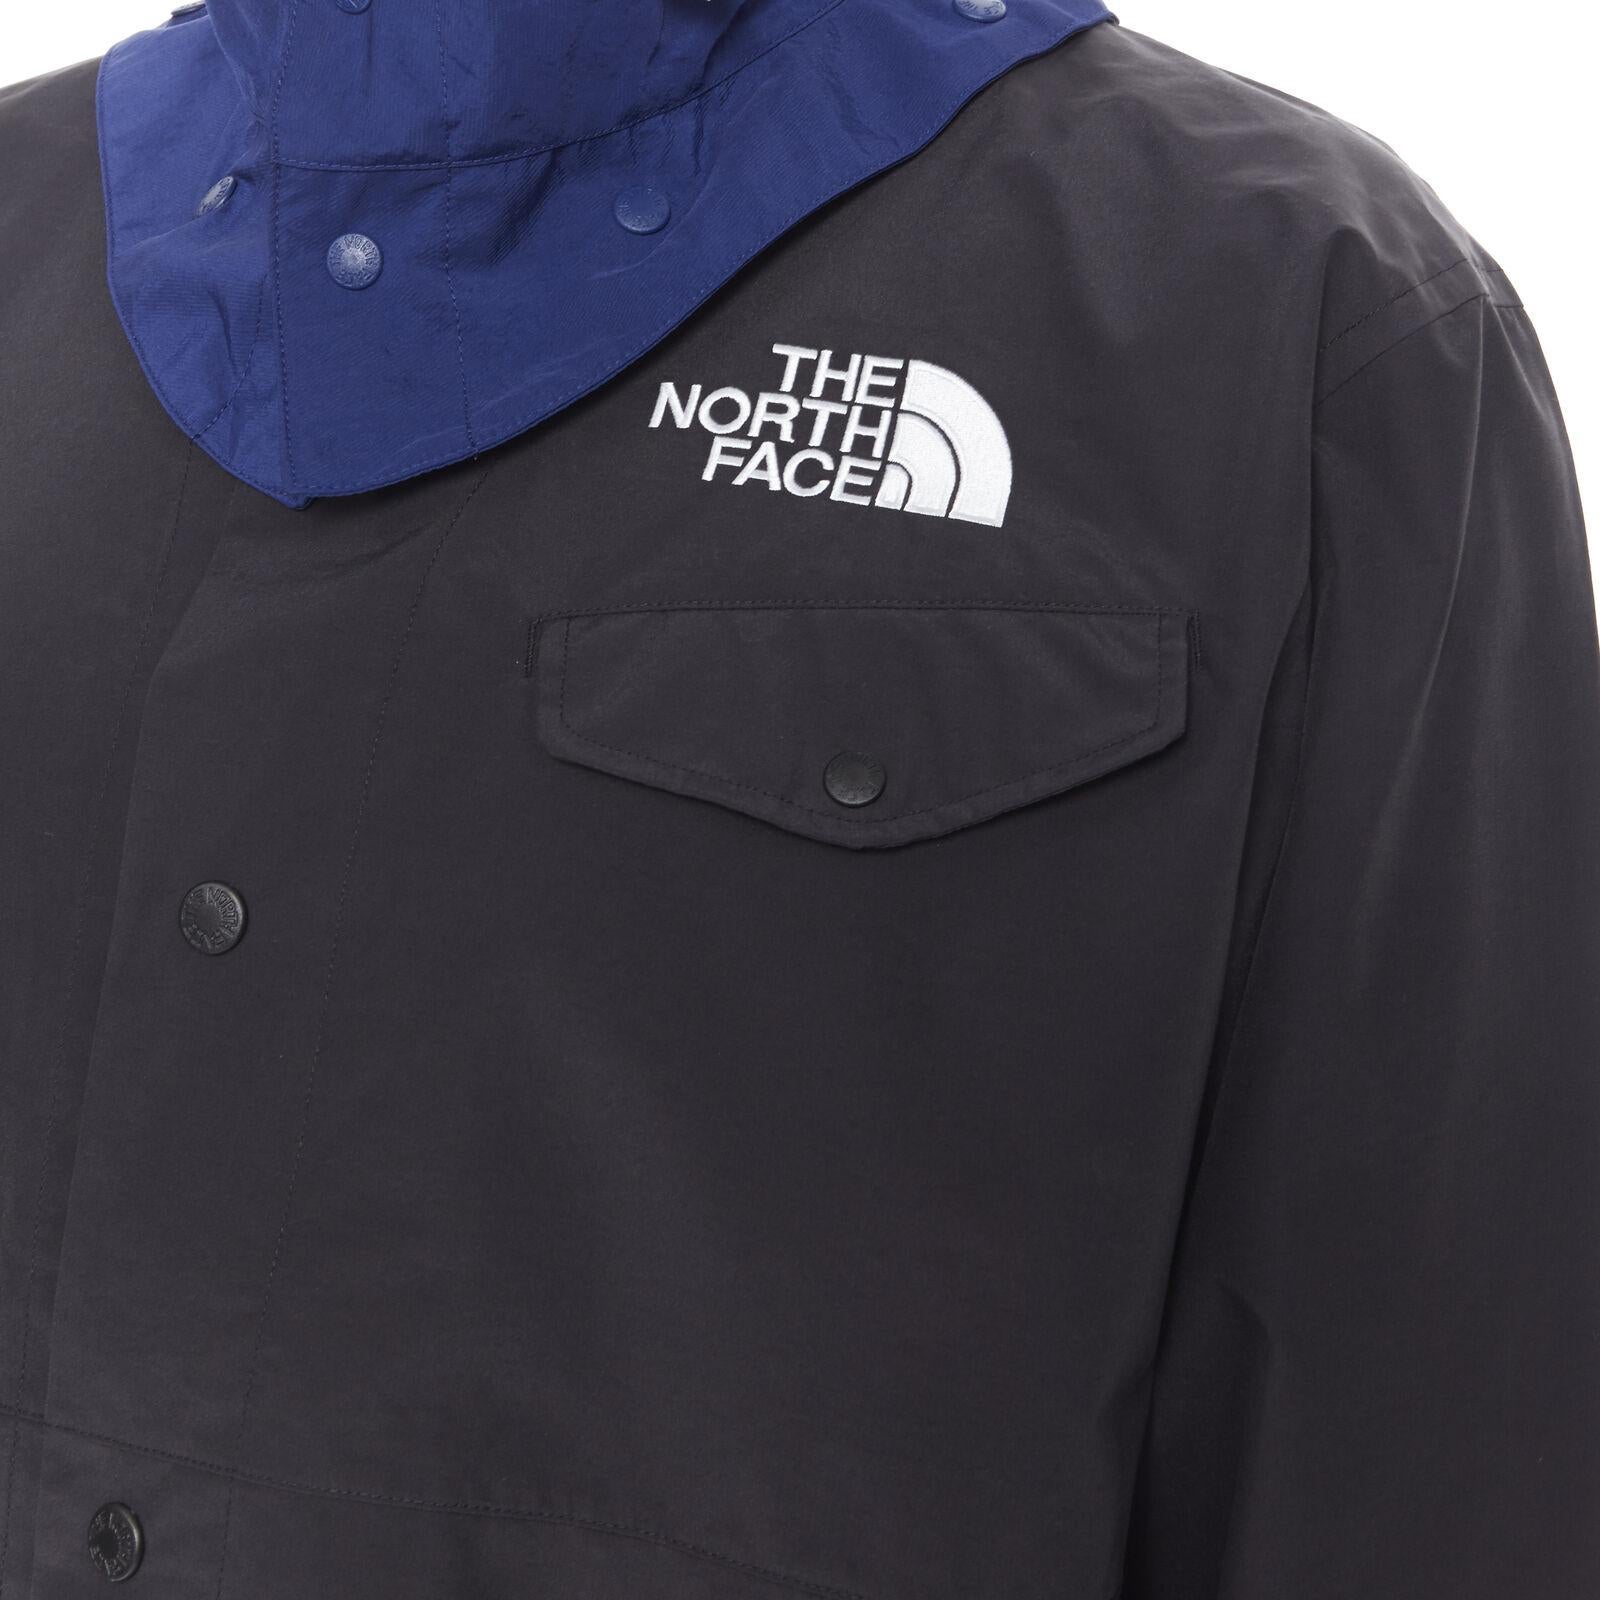 new THE NORTH FACE KAZUKI KURAISHI Black Label Charlie Duty Jacket Black Blue XL For Sale 5